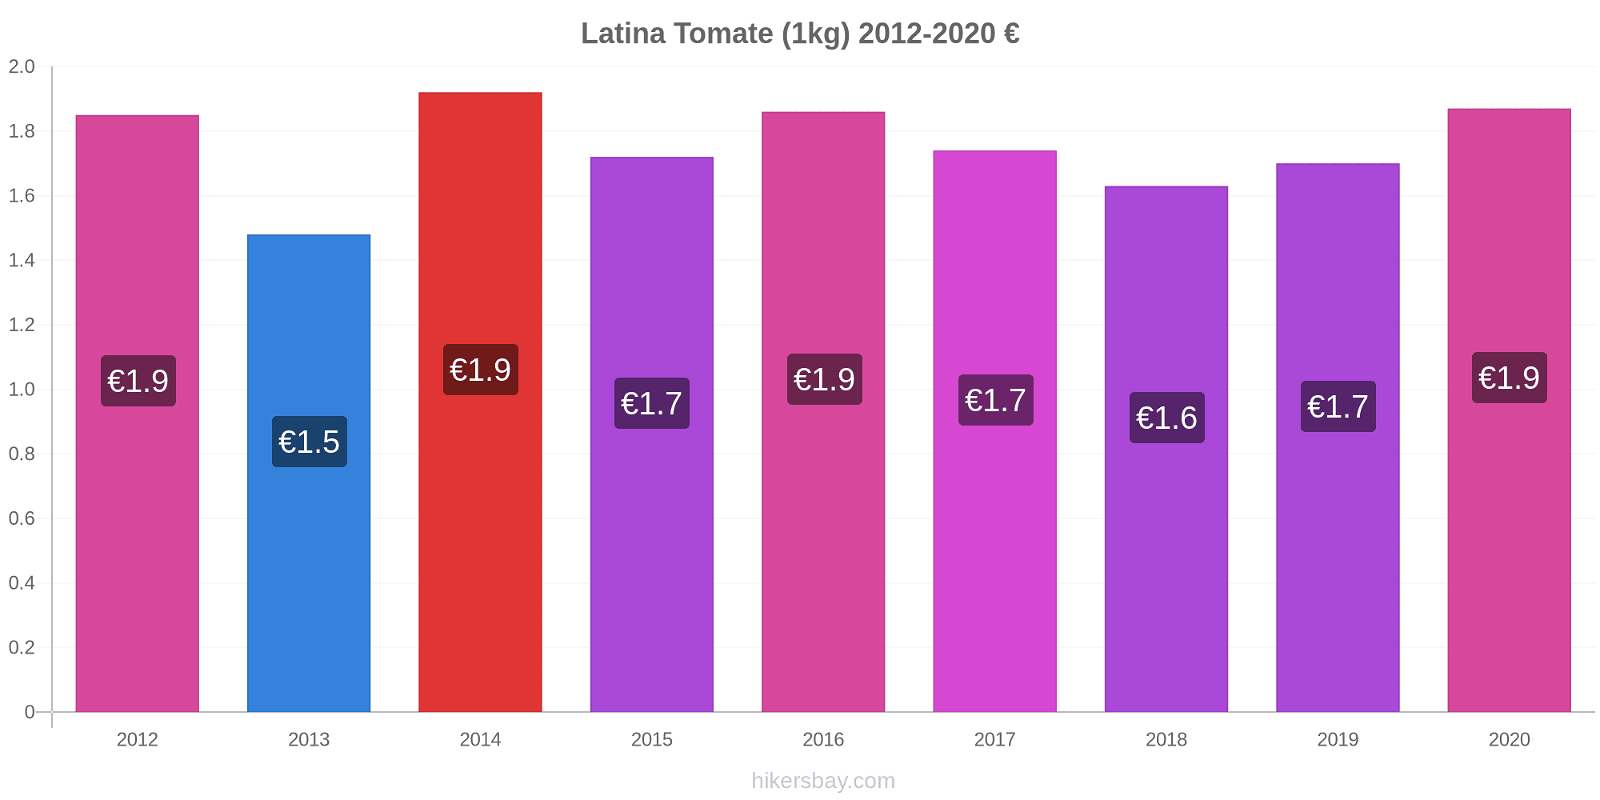 Latina changements de prix Tomate (1kg) hikersbay.com